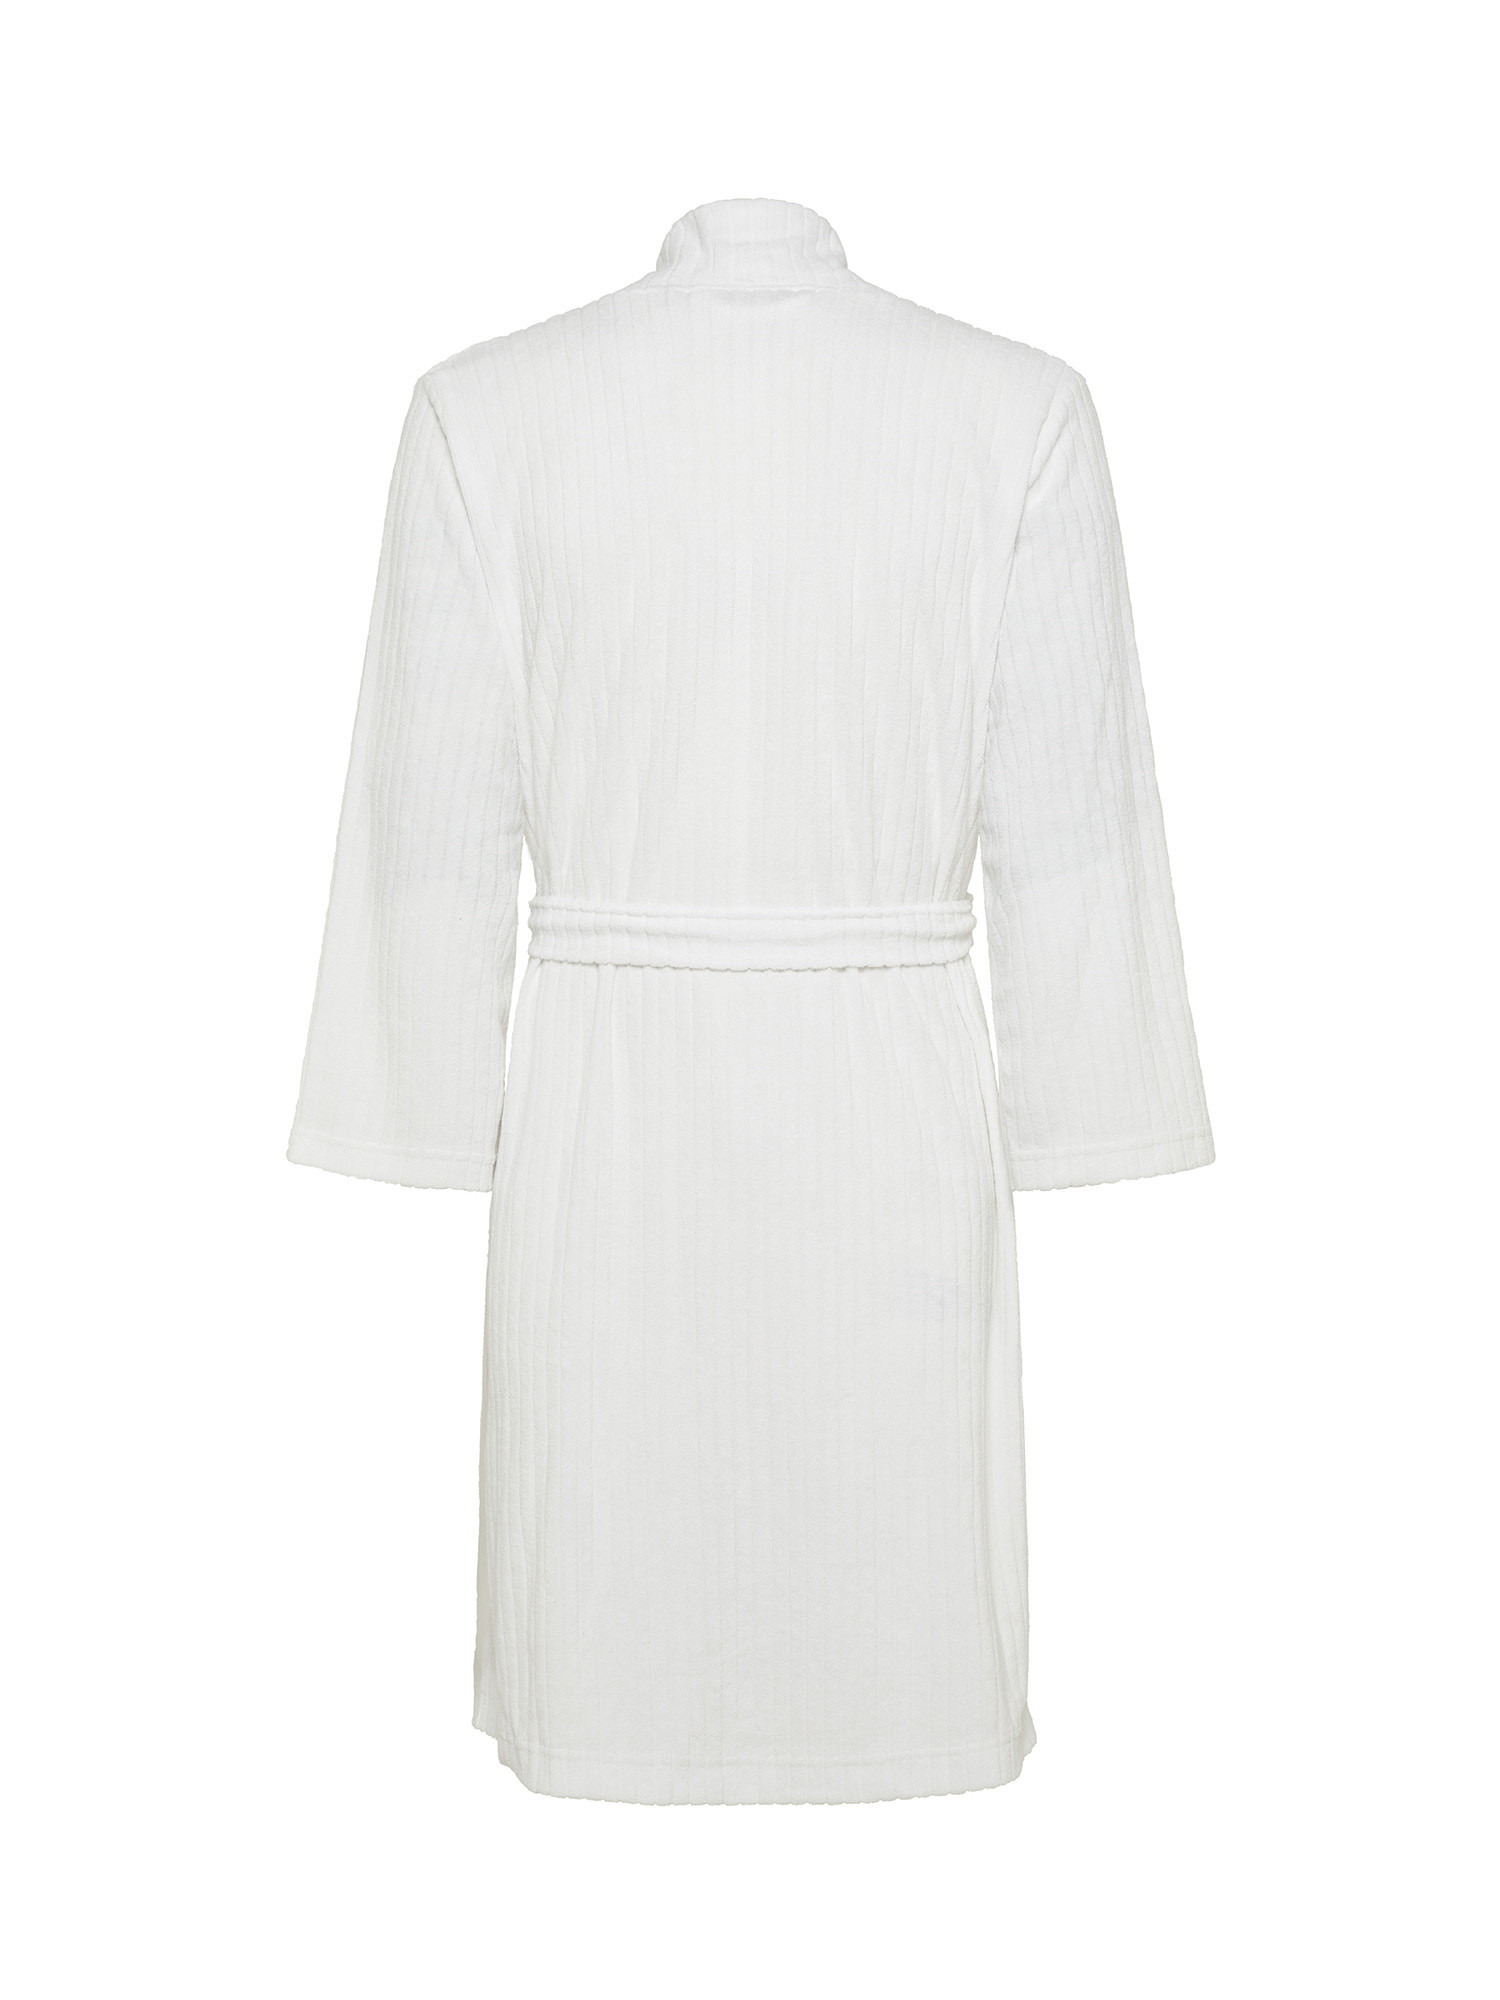 Knitted bathrobe, White, large image number 1